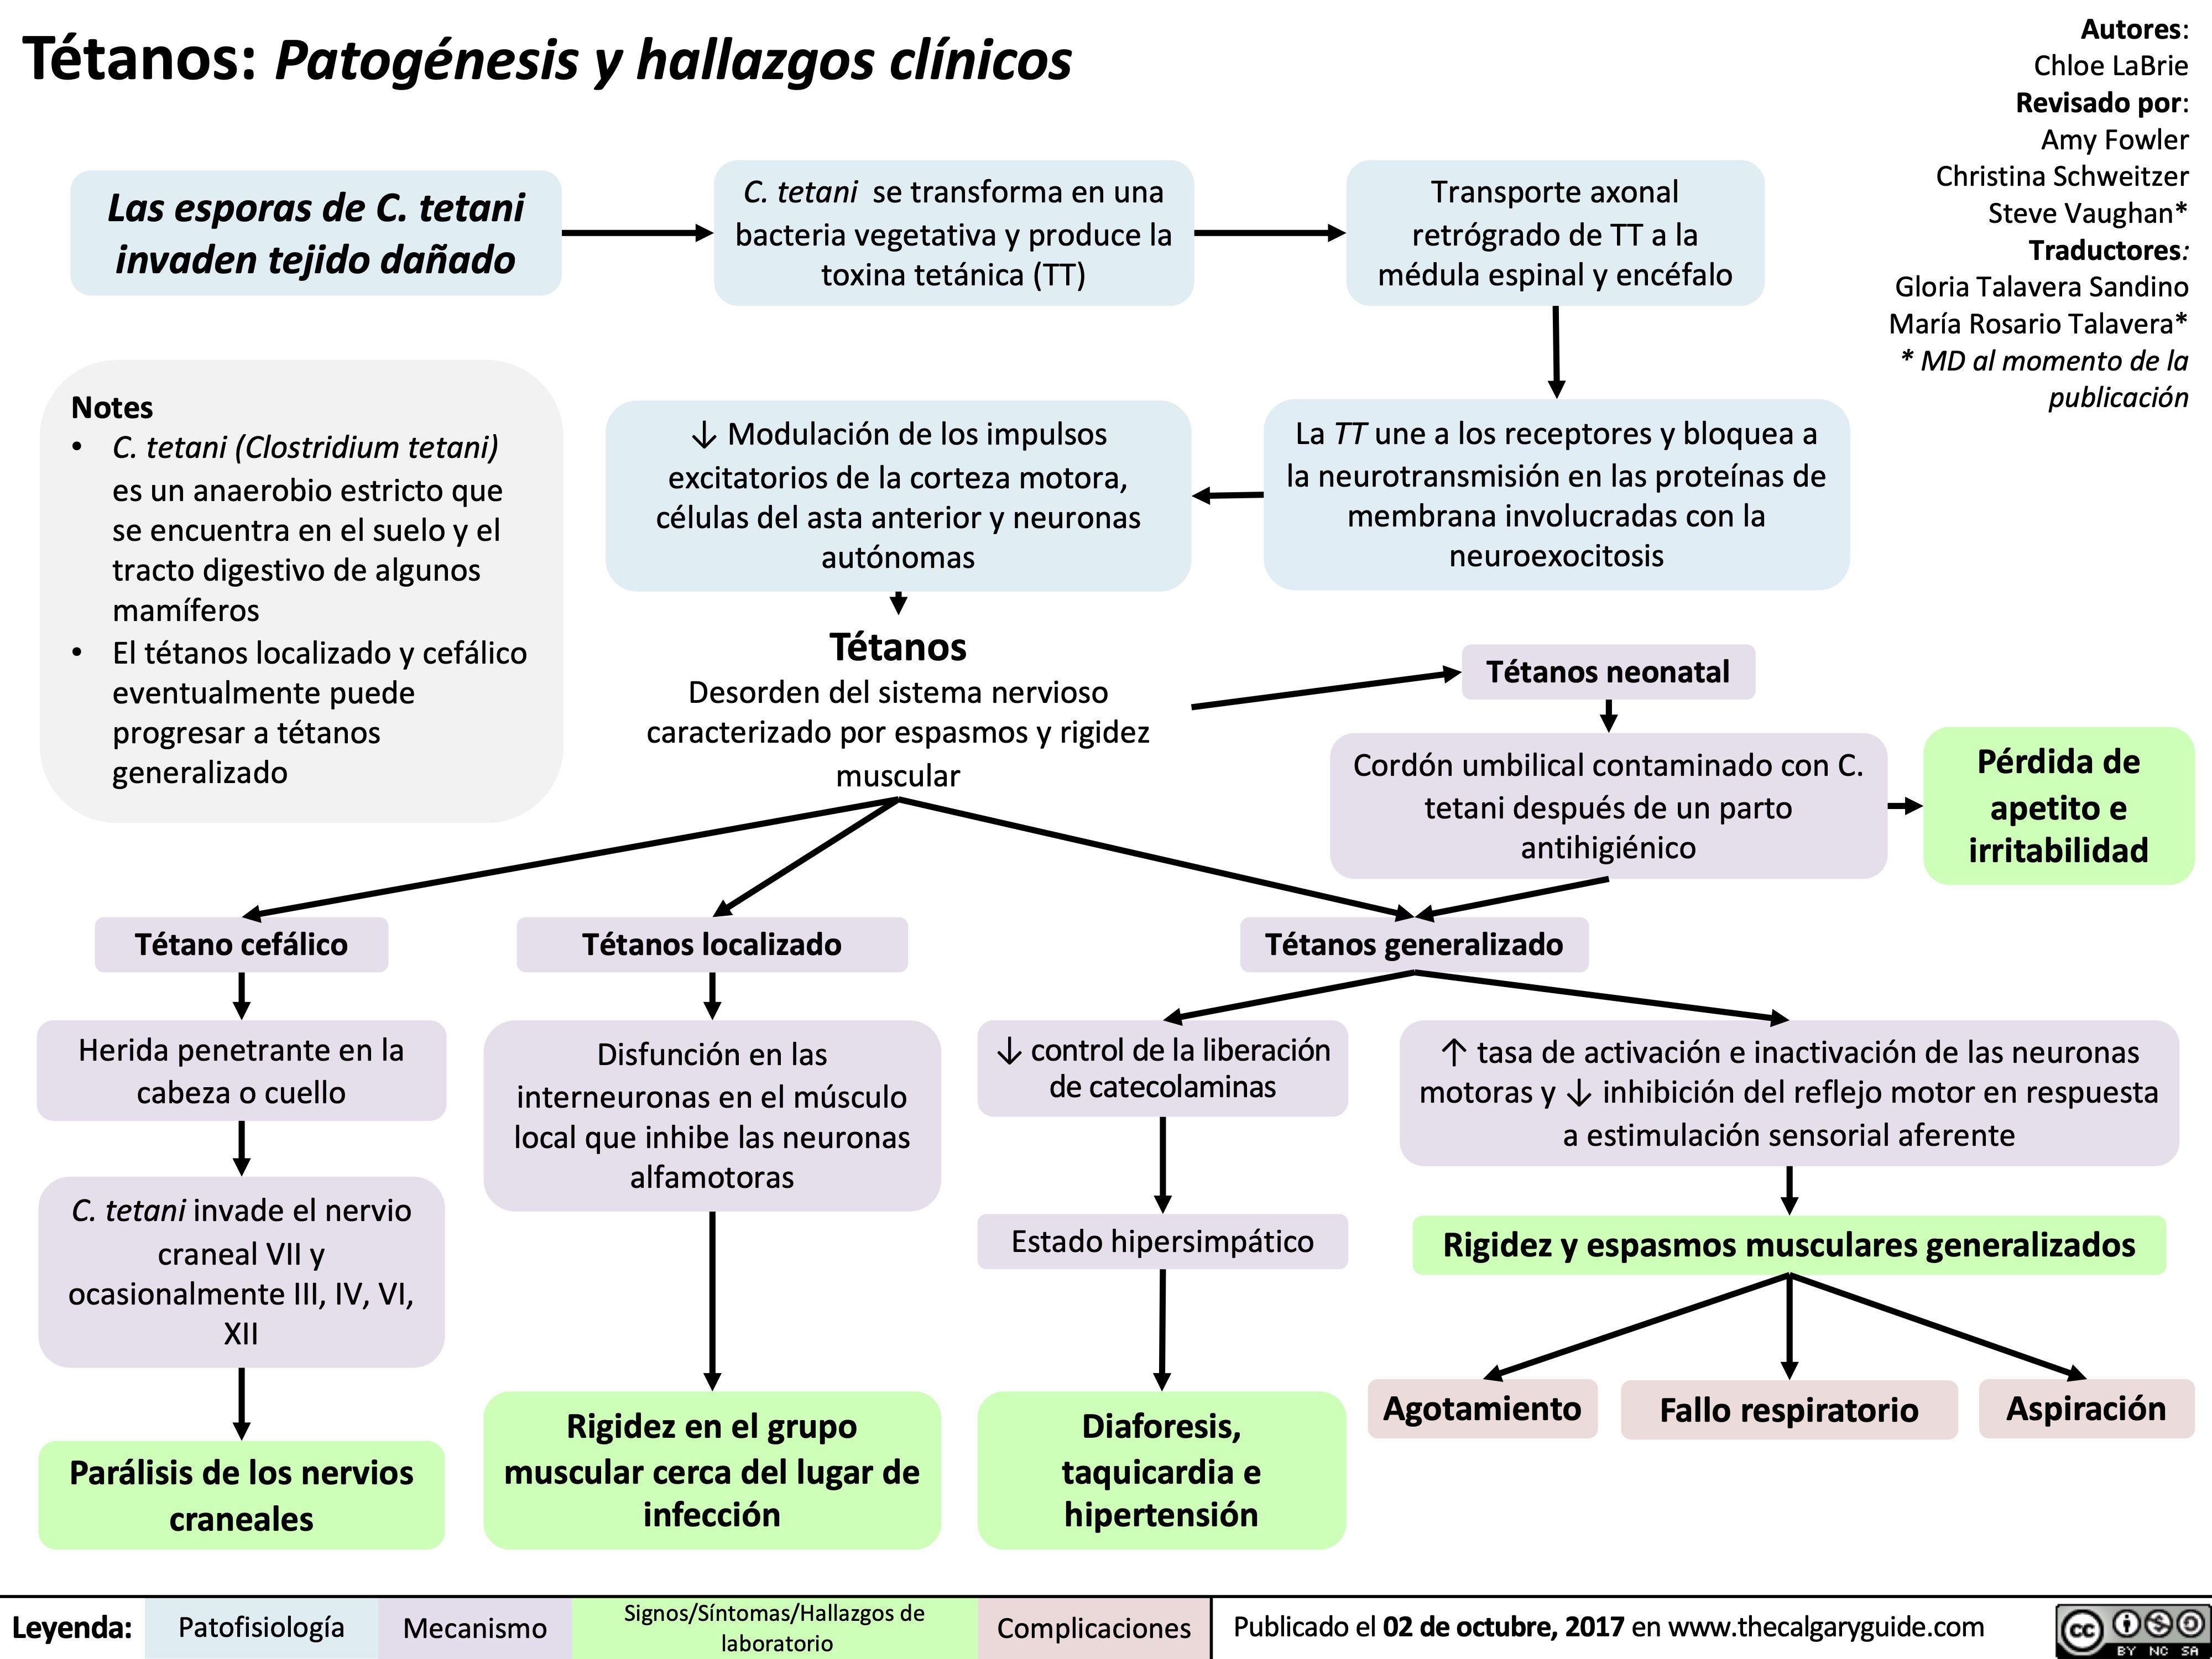 Tétanos: Patogénesis y hallazgos clínicos

tetanos-patogenesis-y-hallazgos-clinicos